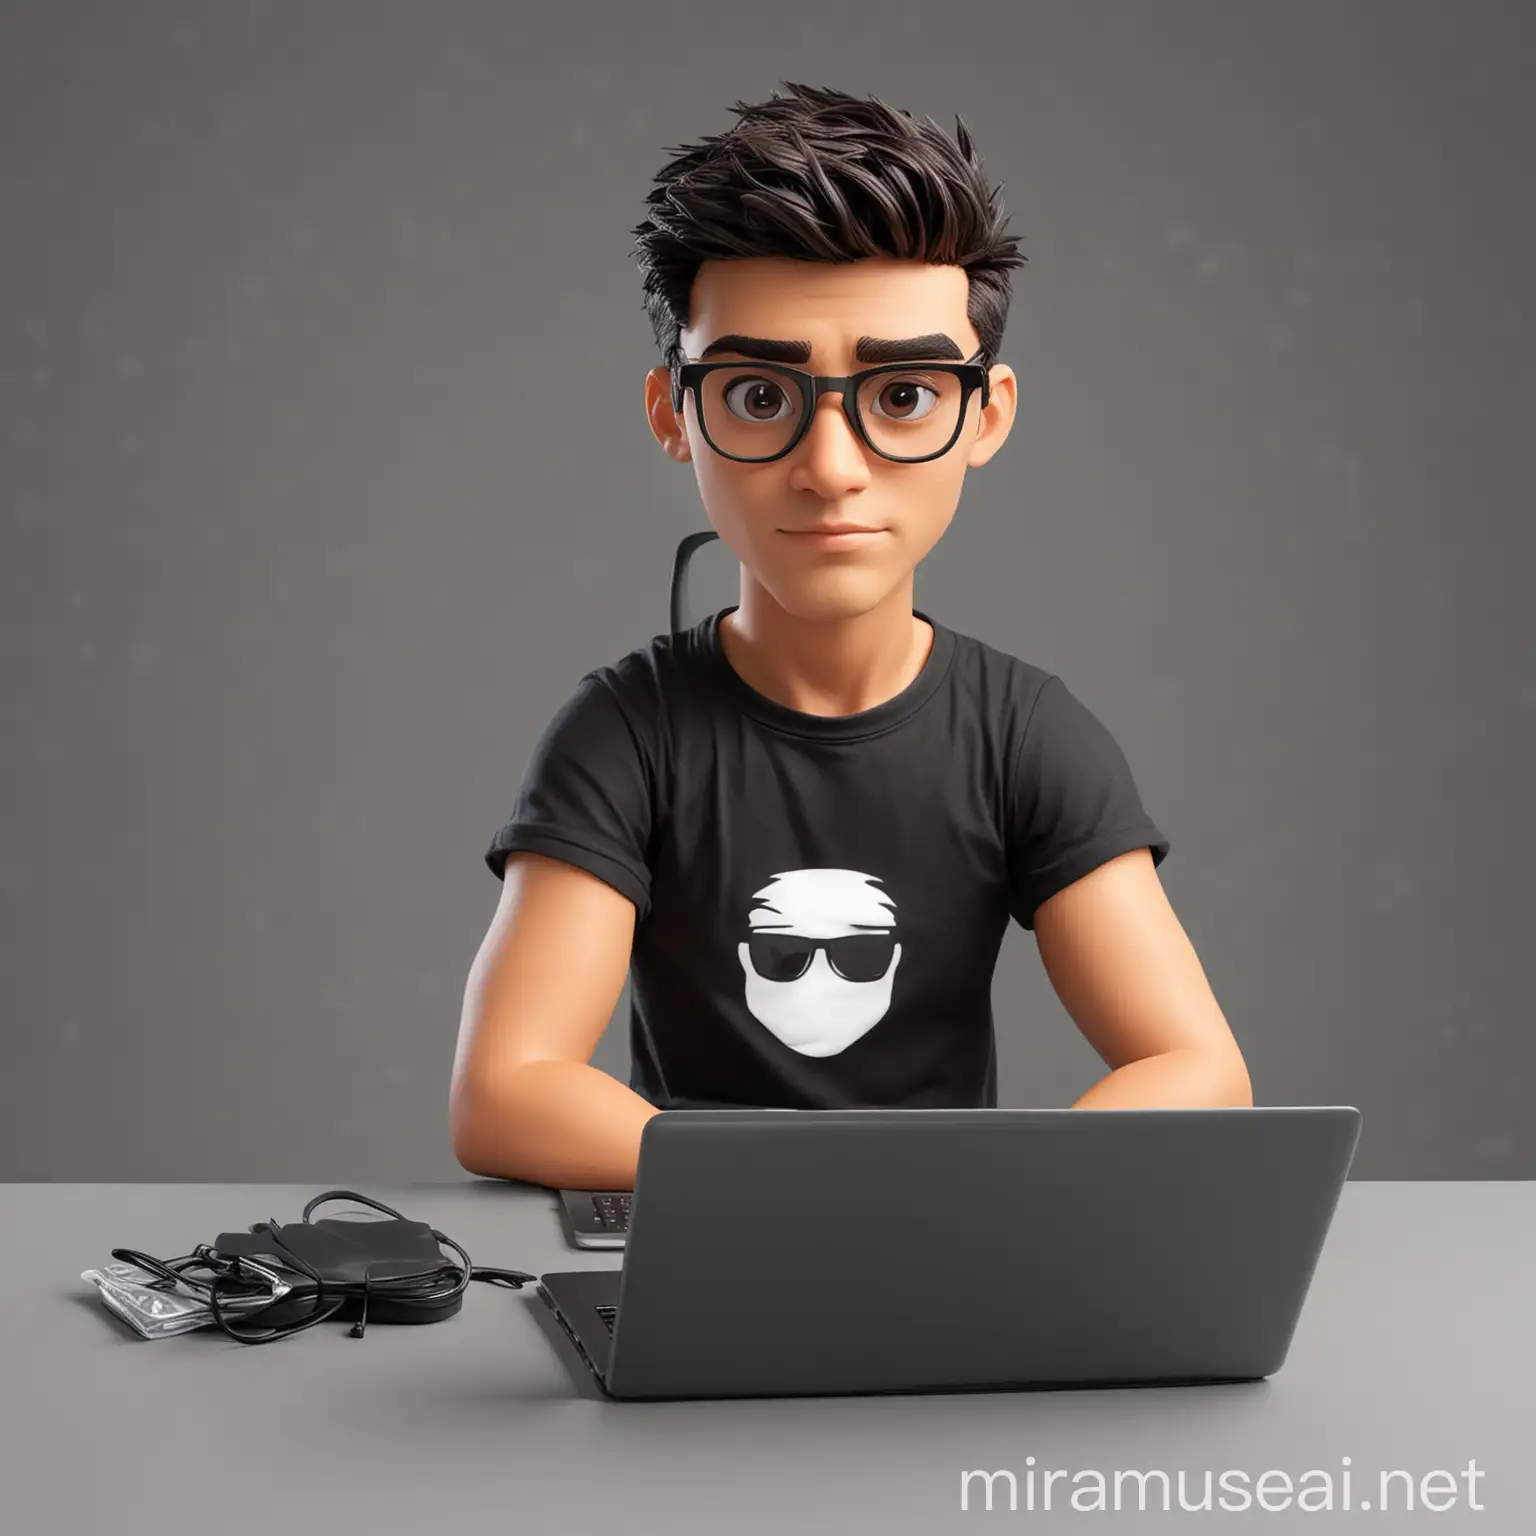 Cartoon Student Programmer Avatar with Laptop on Light Gray Background